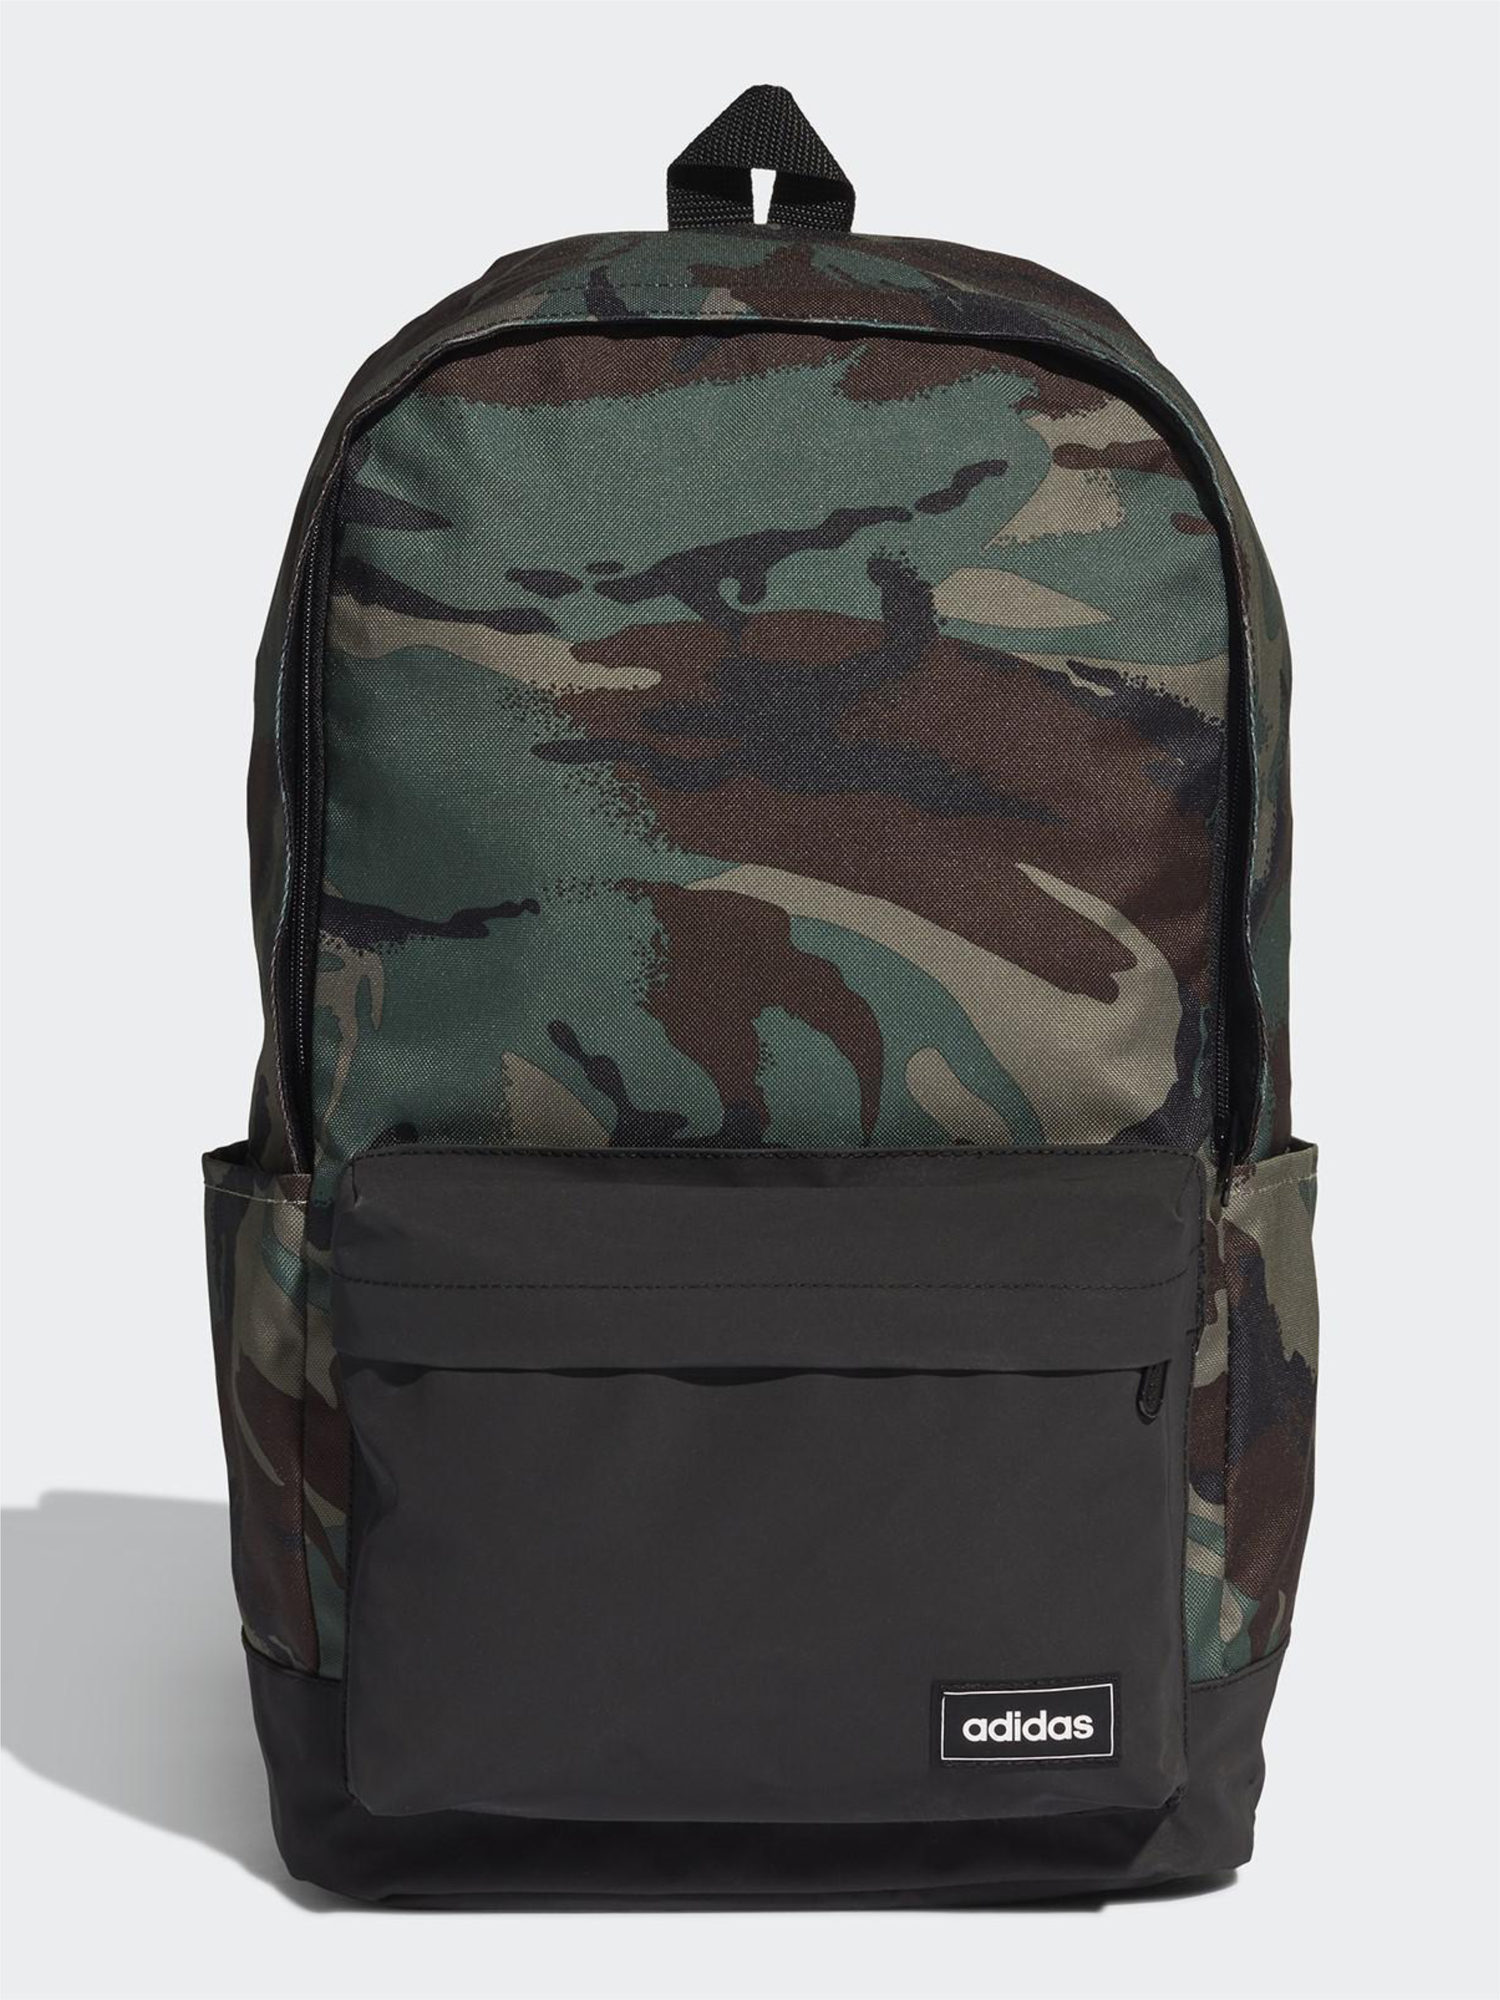 Рюкзак для бега adidas Classic Camouflage (Multicolor / Black / Legacy Green), хаки